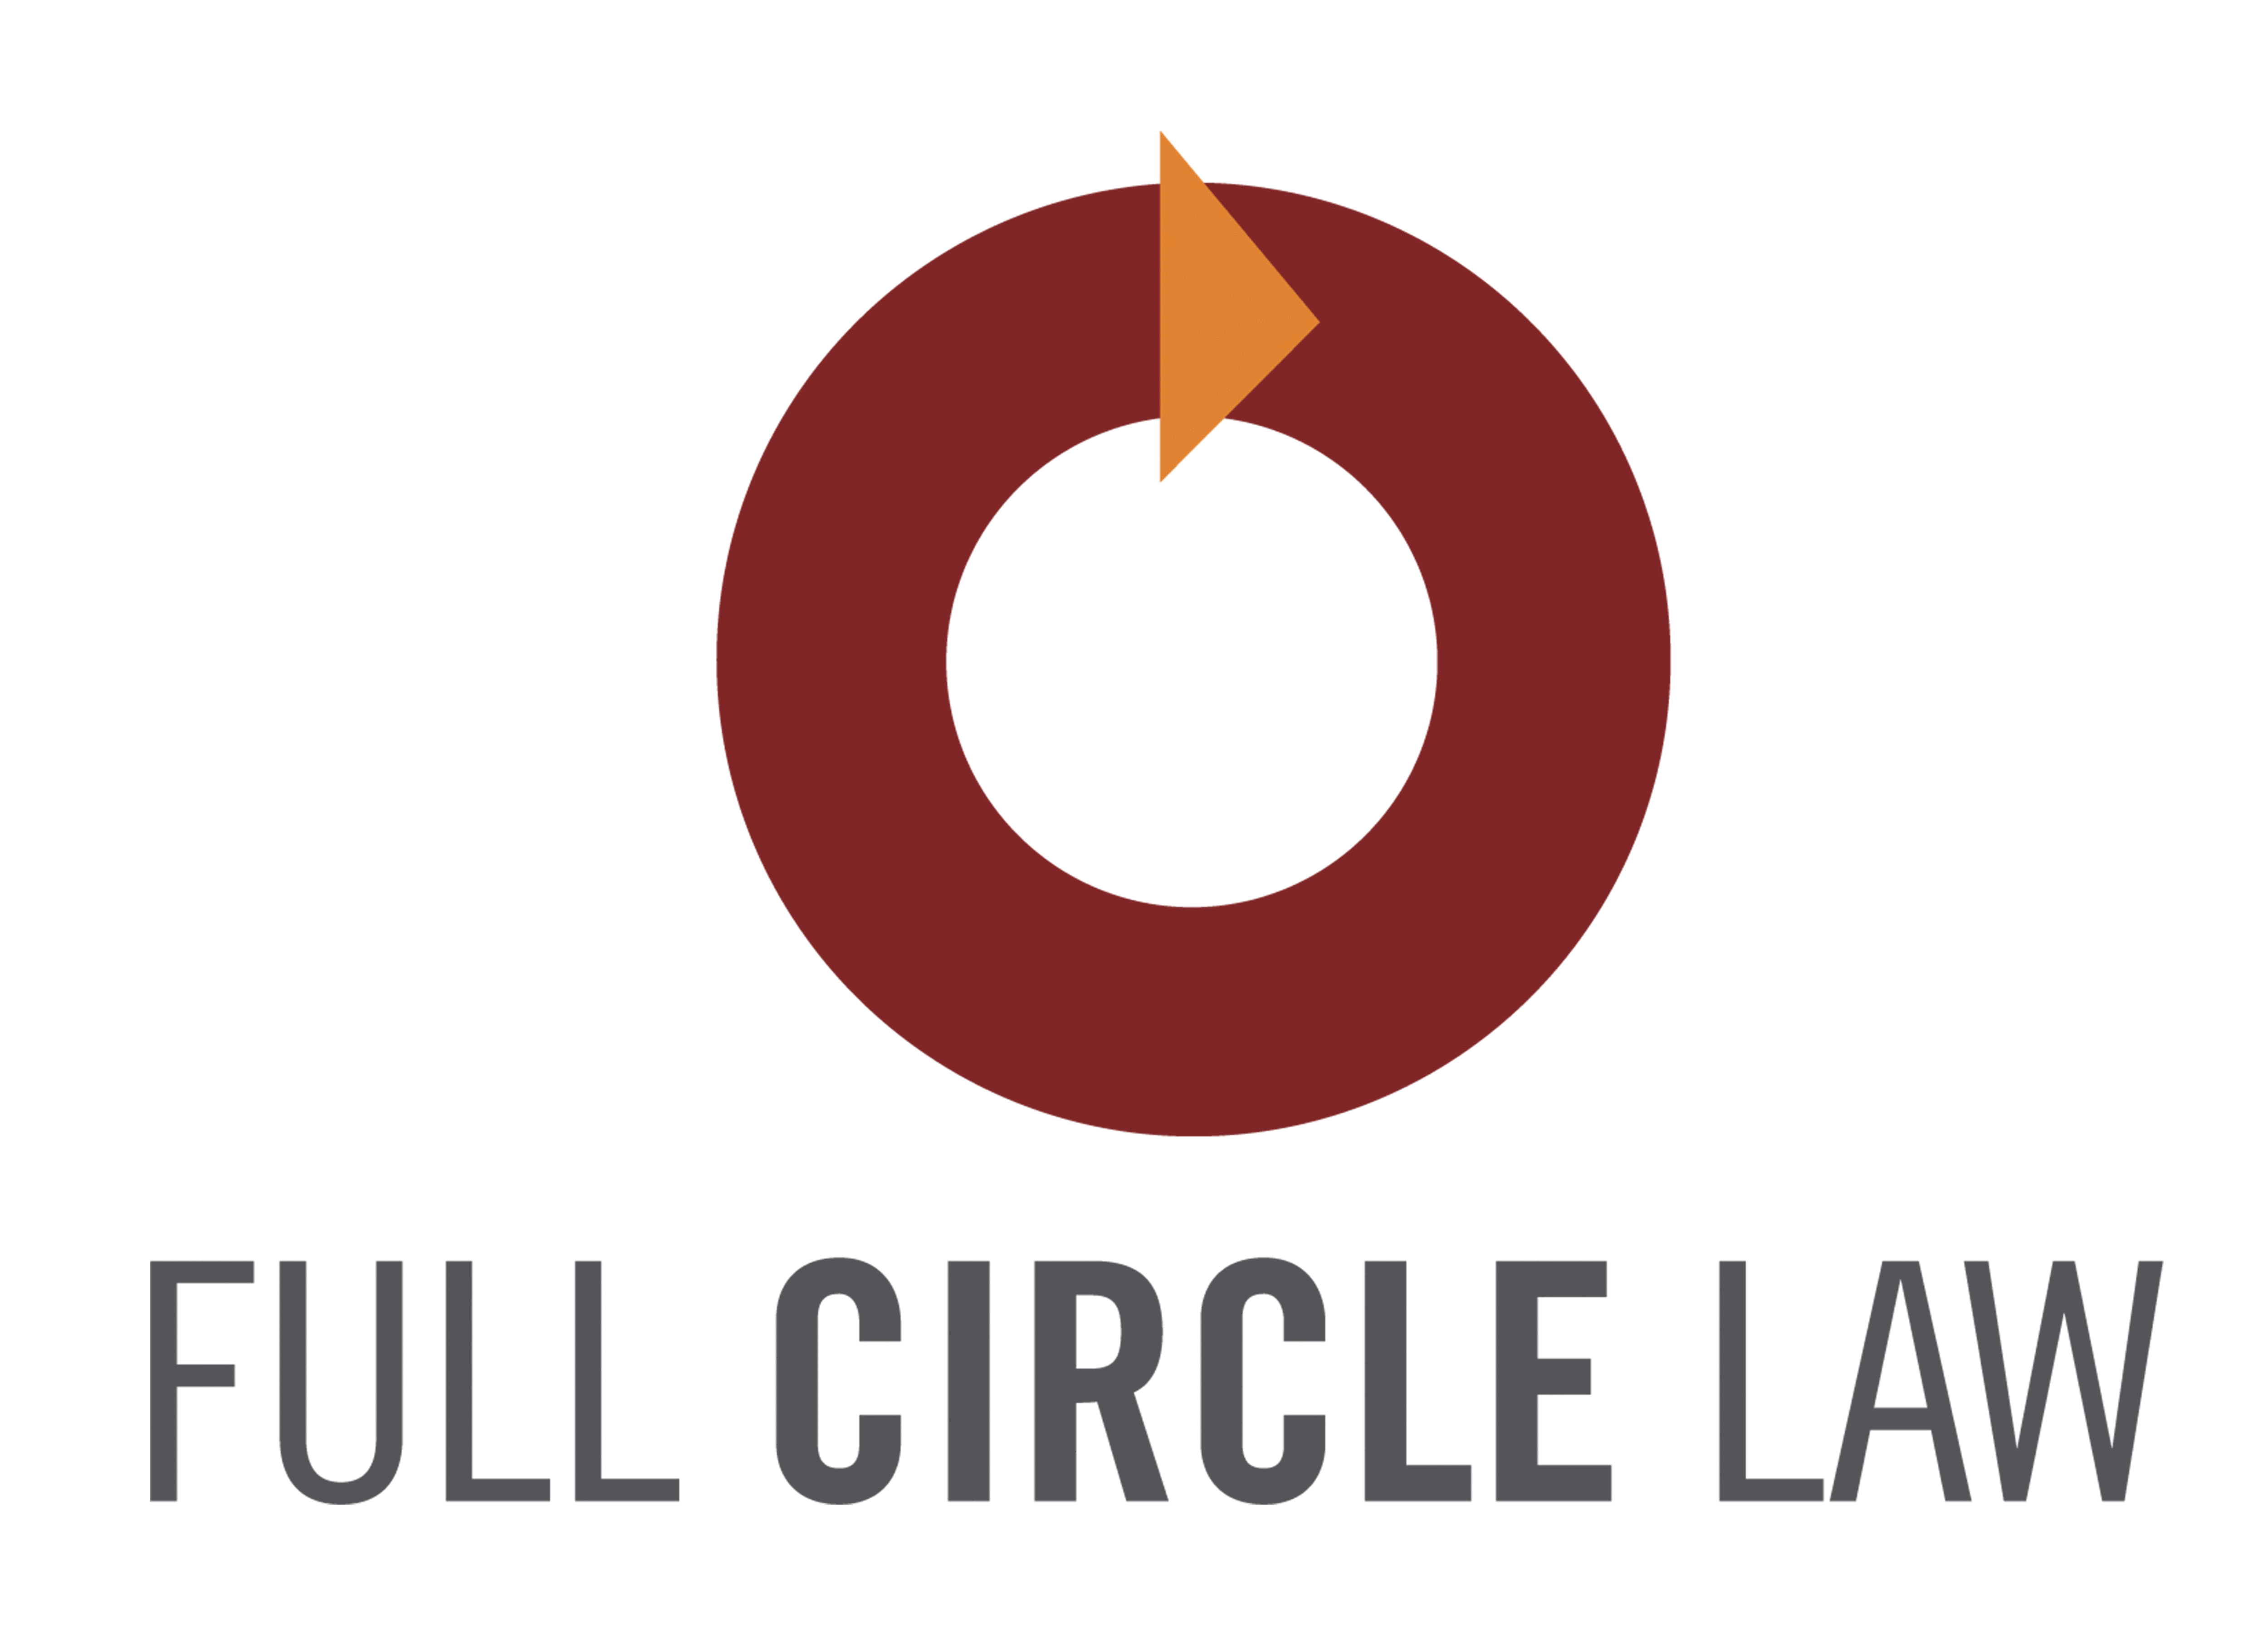 Full Circle Law logo